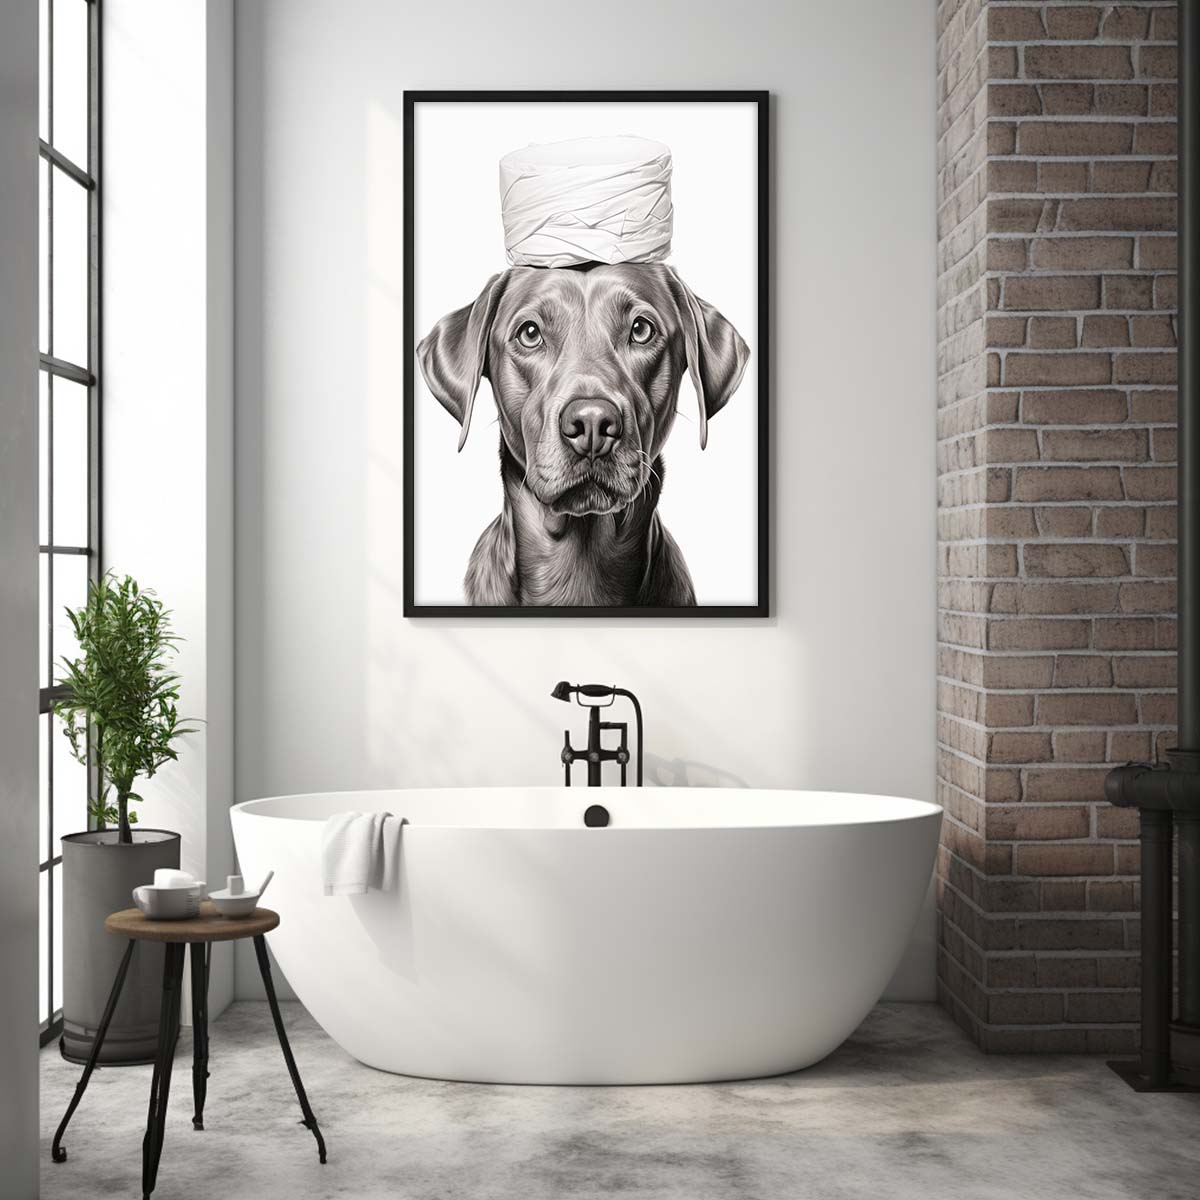 Retriever Dog With Toilet Paper Canvas Art, Retriever Dog With Toilet Paper, Funny Dog Art, Bathroom Wall Decor, Home Decor, Bathroom Wall Art, Dog Wall Decor, Animal Decor, Pet Gift